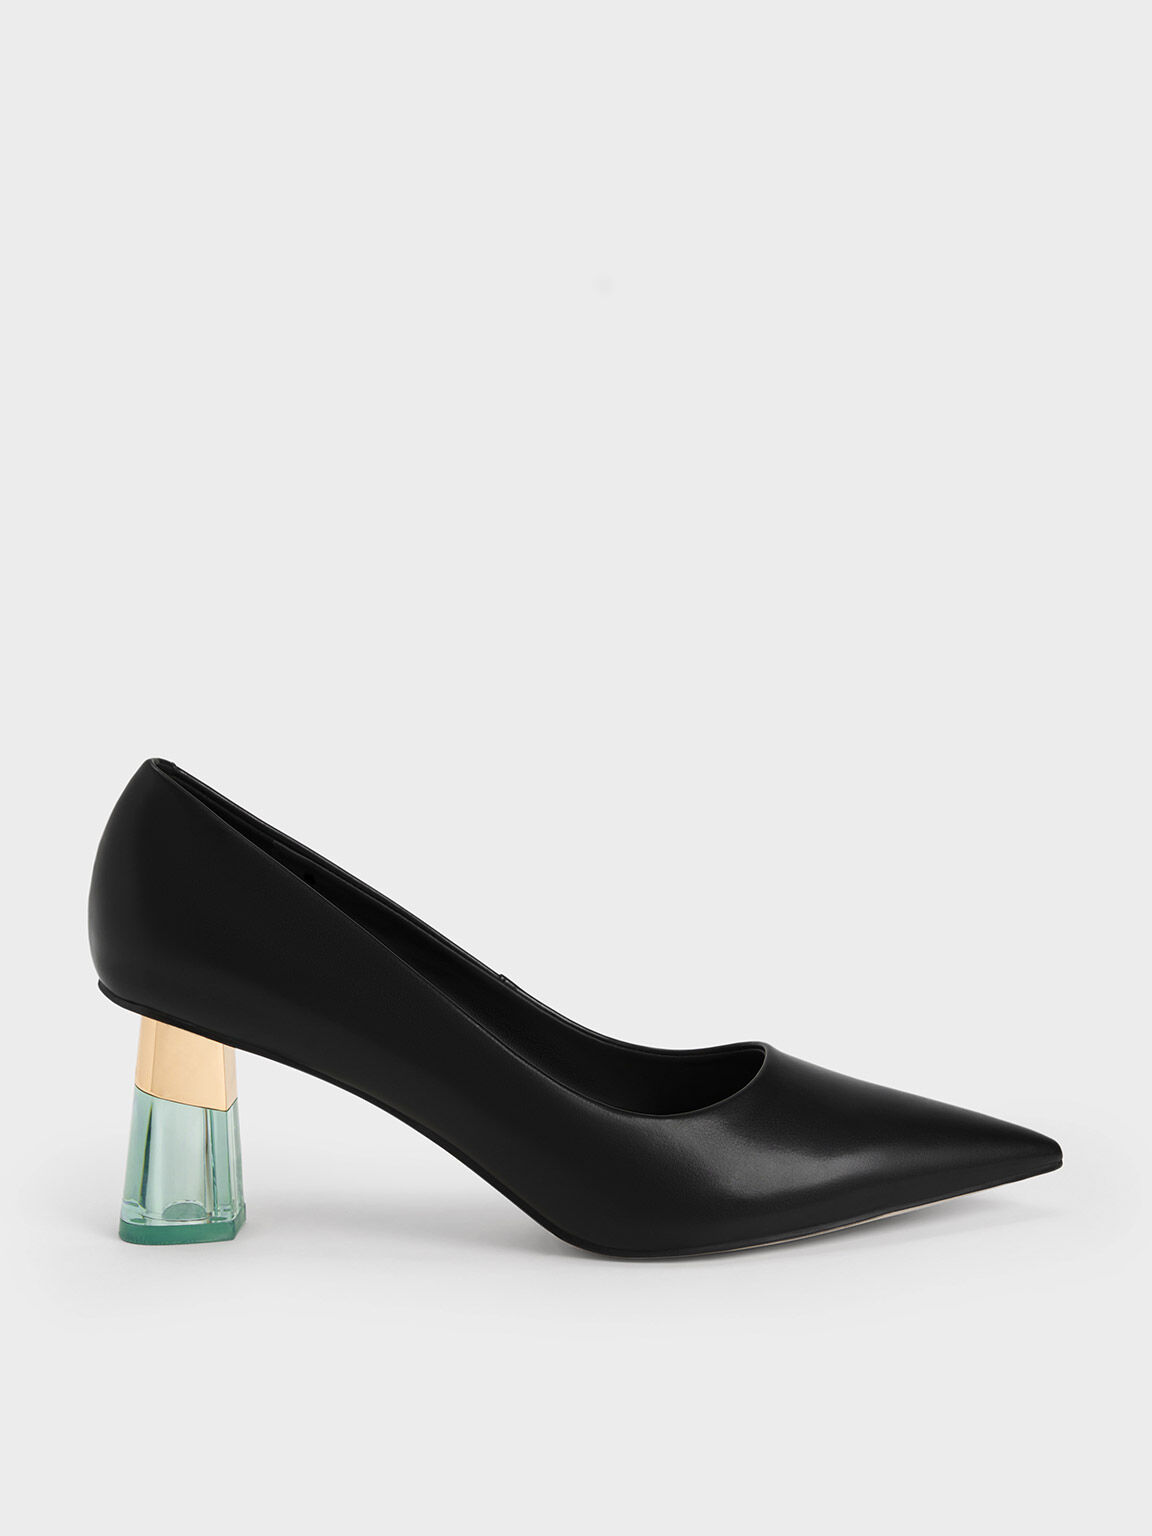 Zapatos de Tacón Traslúcido con Detalle Metálico, Black, hi-res